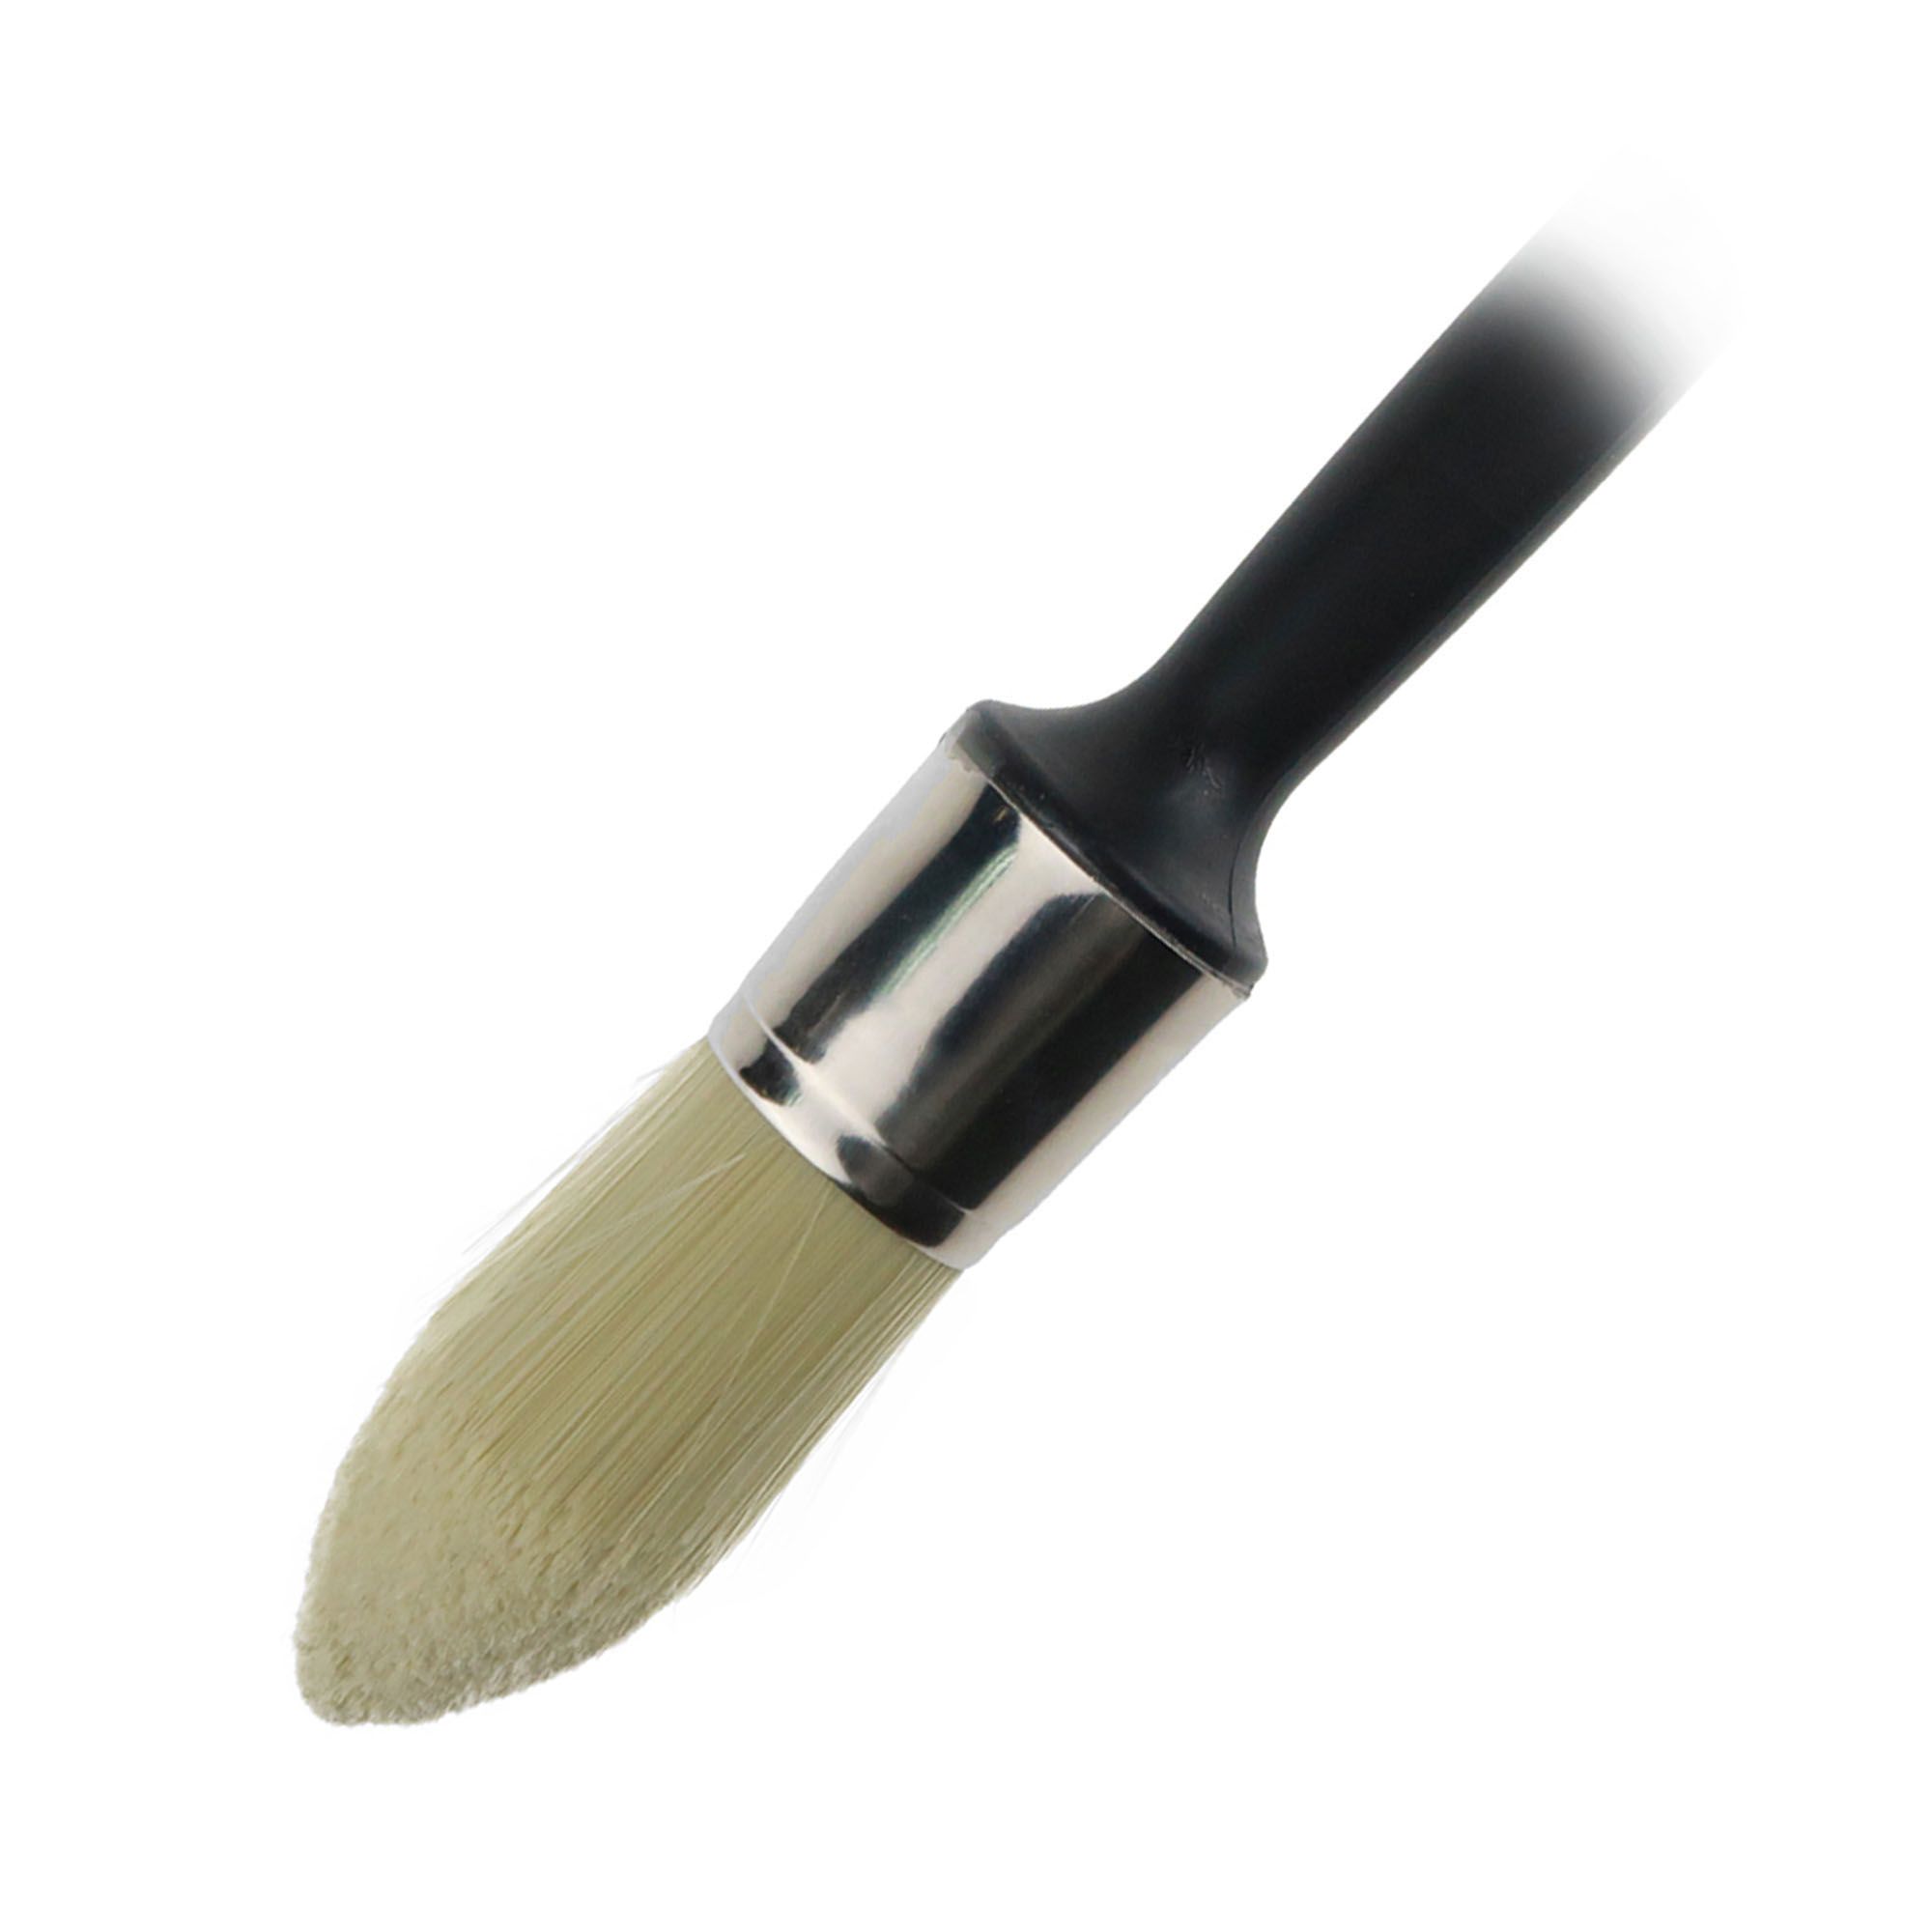 ⅞" Flagged tip Swan neck paint brush